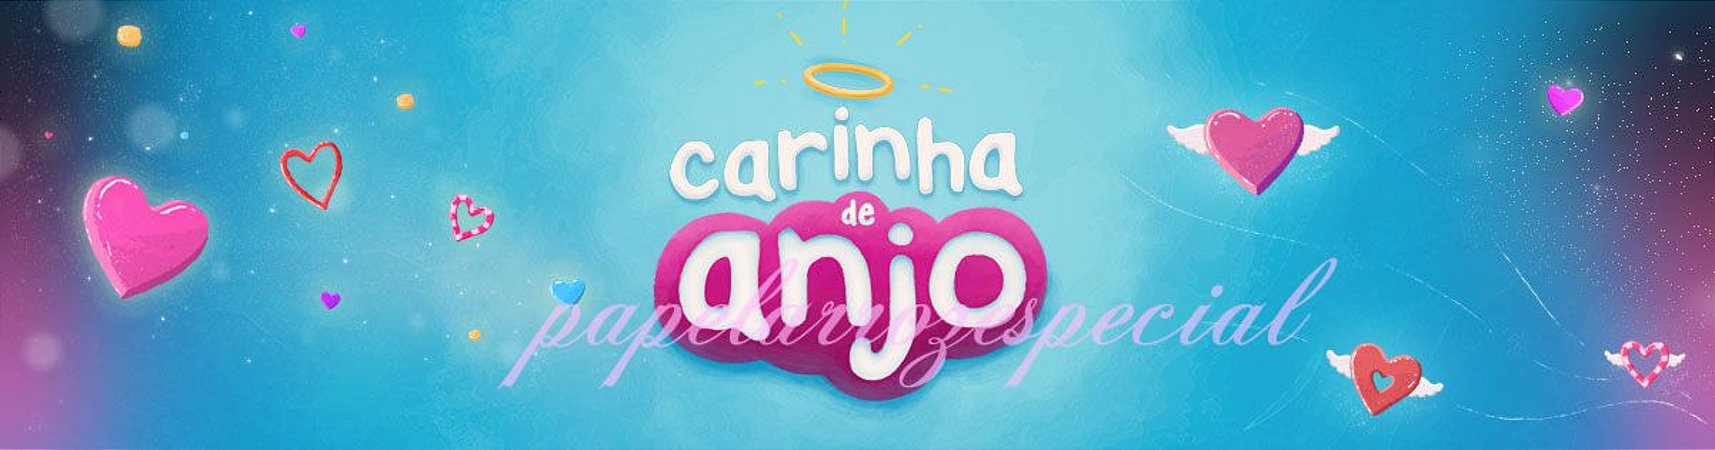 CARINHA DE ANJO FAIXA LATERAL 001 9 CM